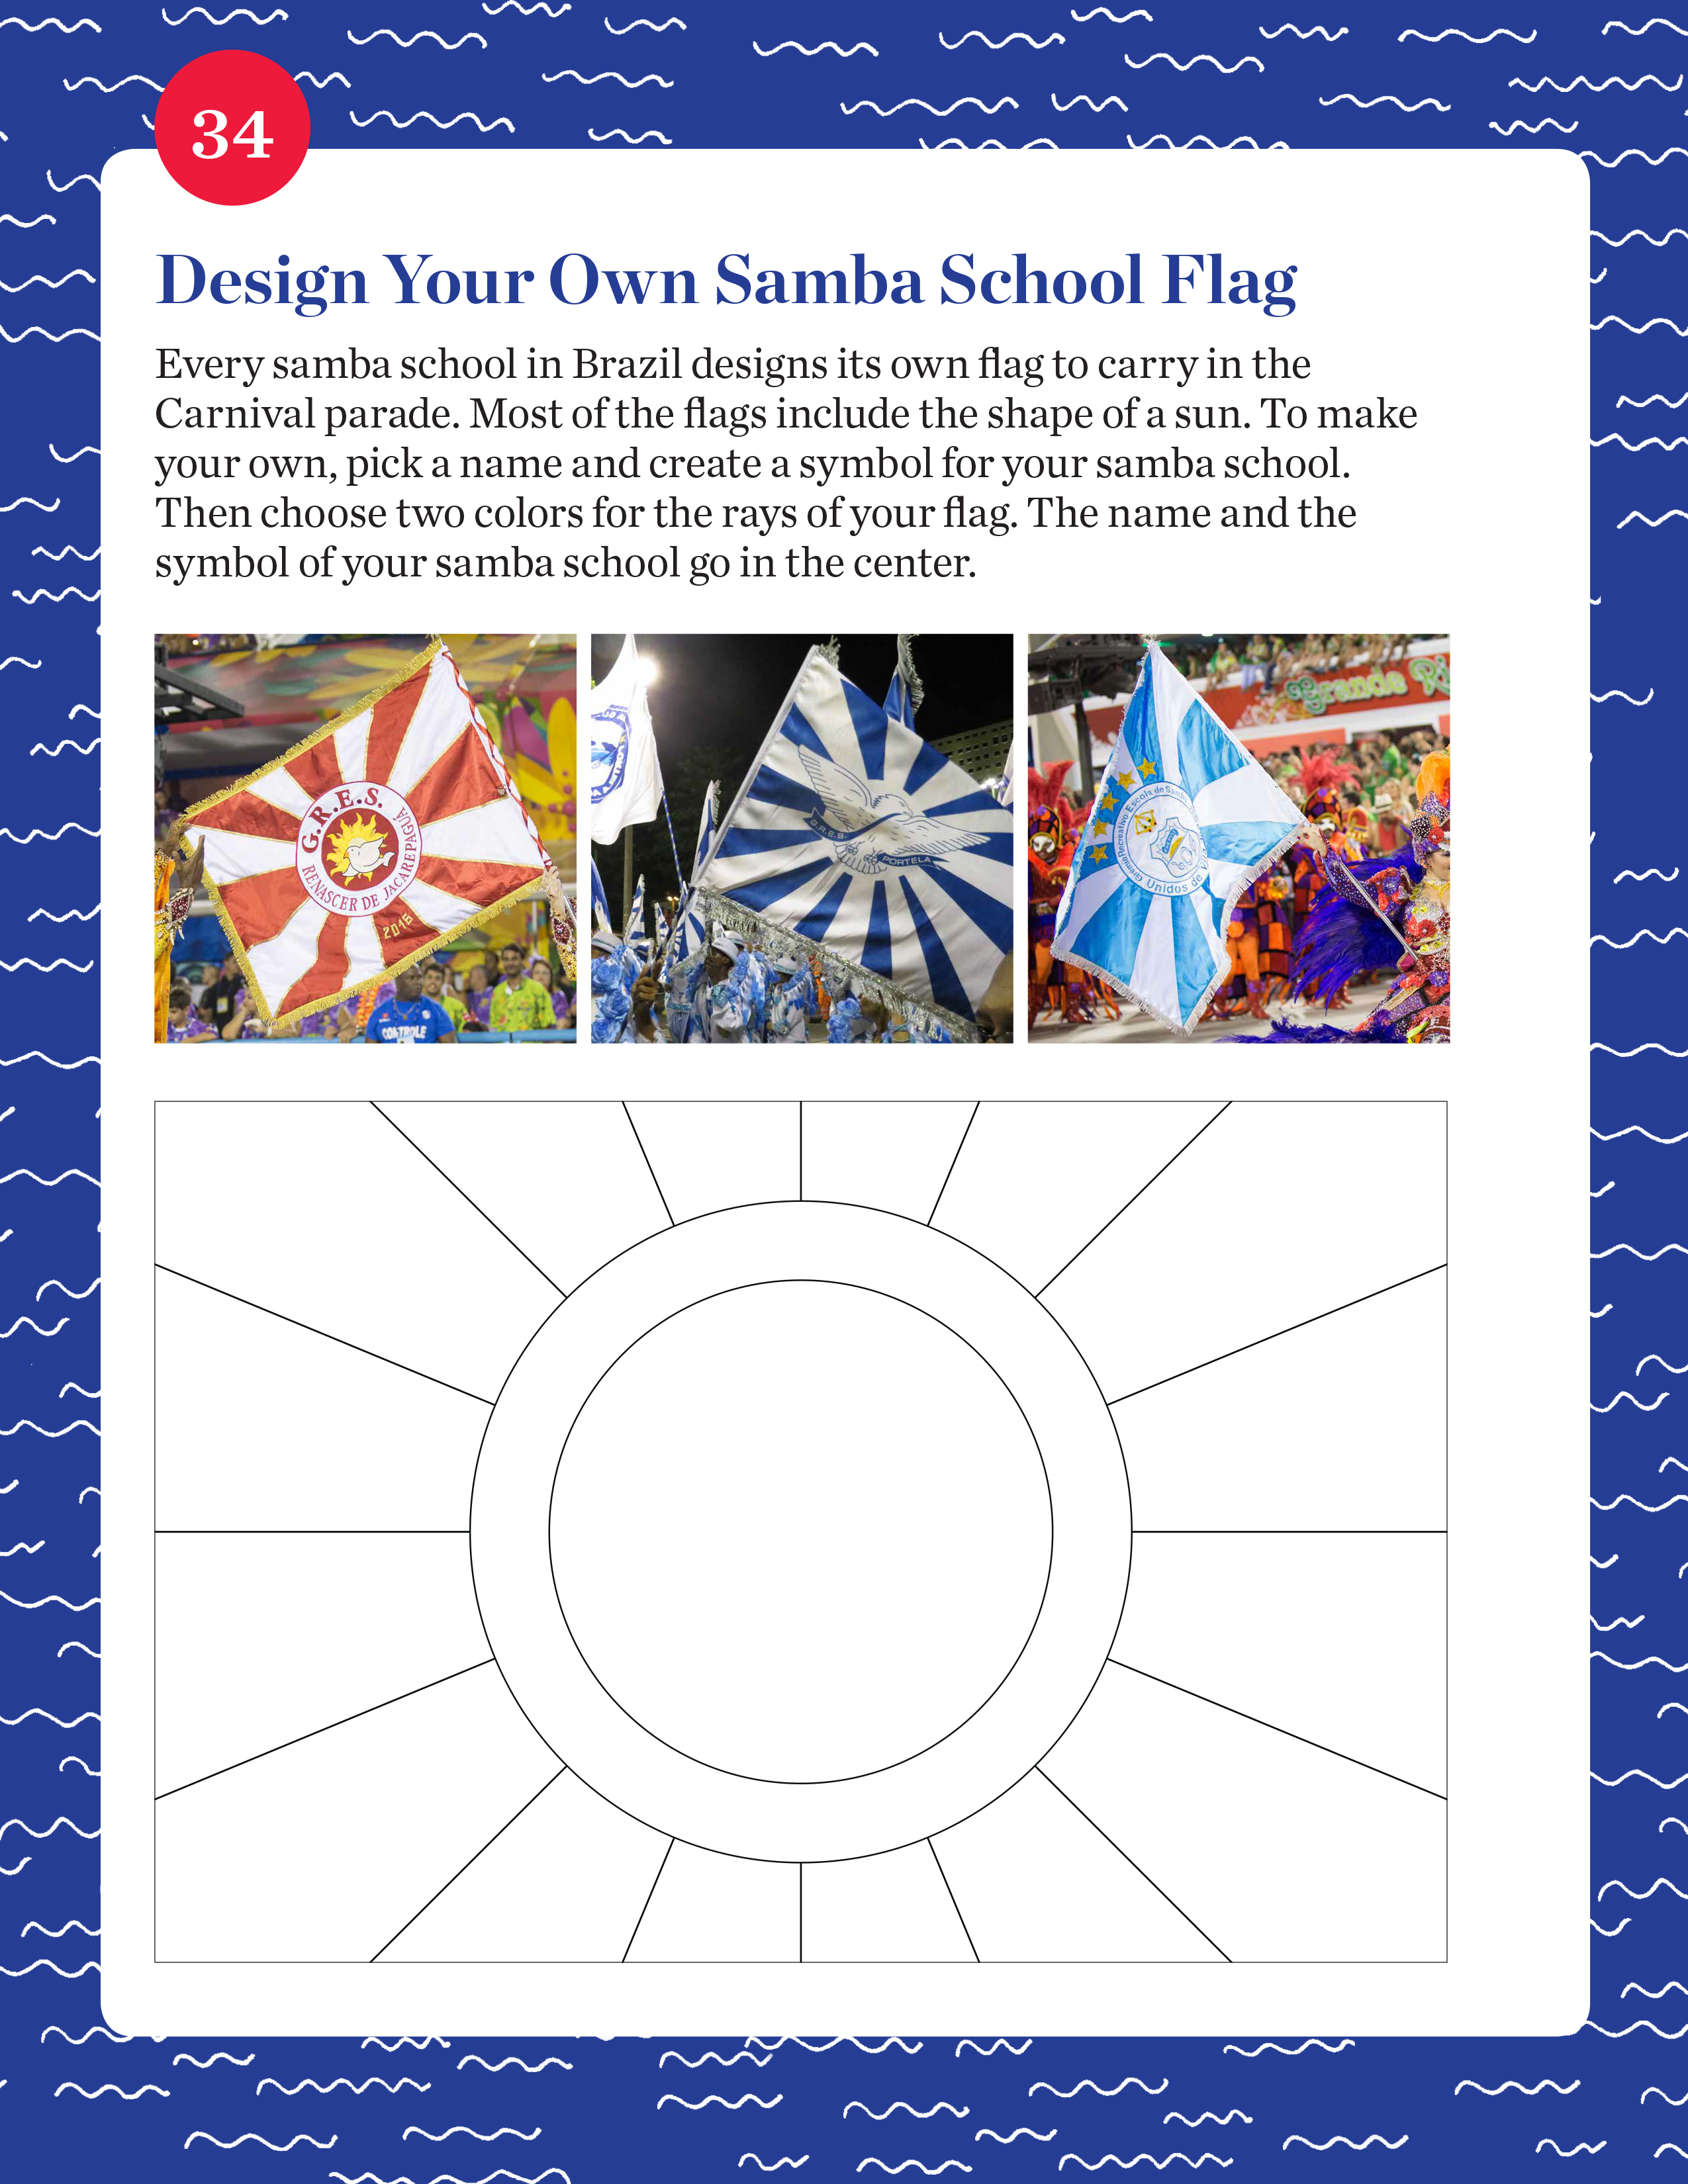 Design Your Own Samba School Flag